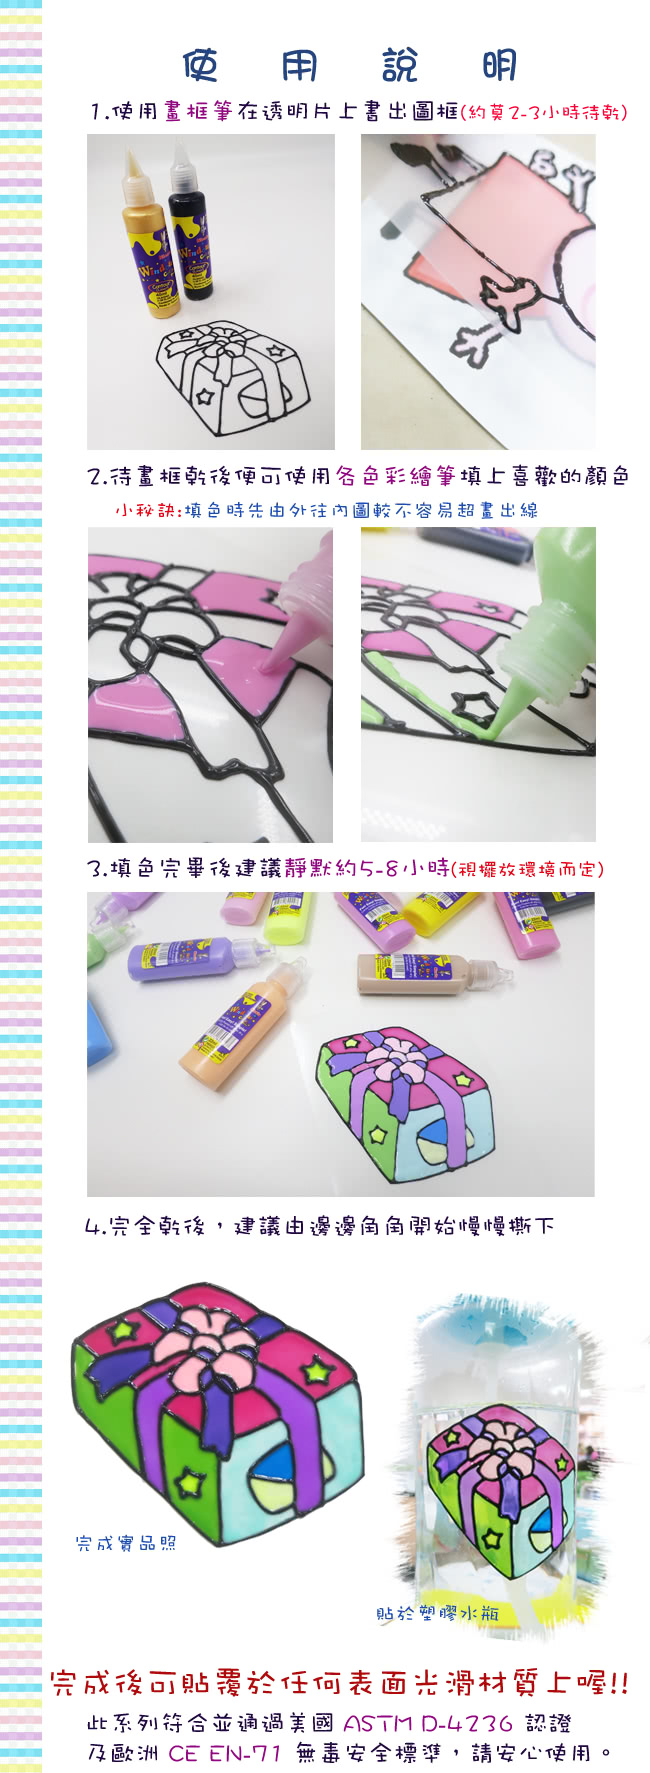 【BabyTiger虎兒寶】愛玩色 兒童無毒彩繪玻璃貼- 彩膠筆 22 ML - 色號 15 單支(台灣製)